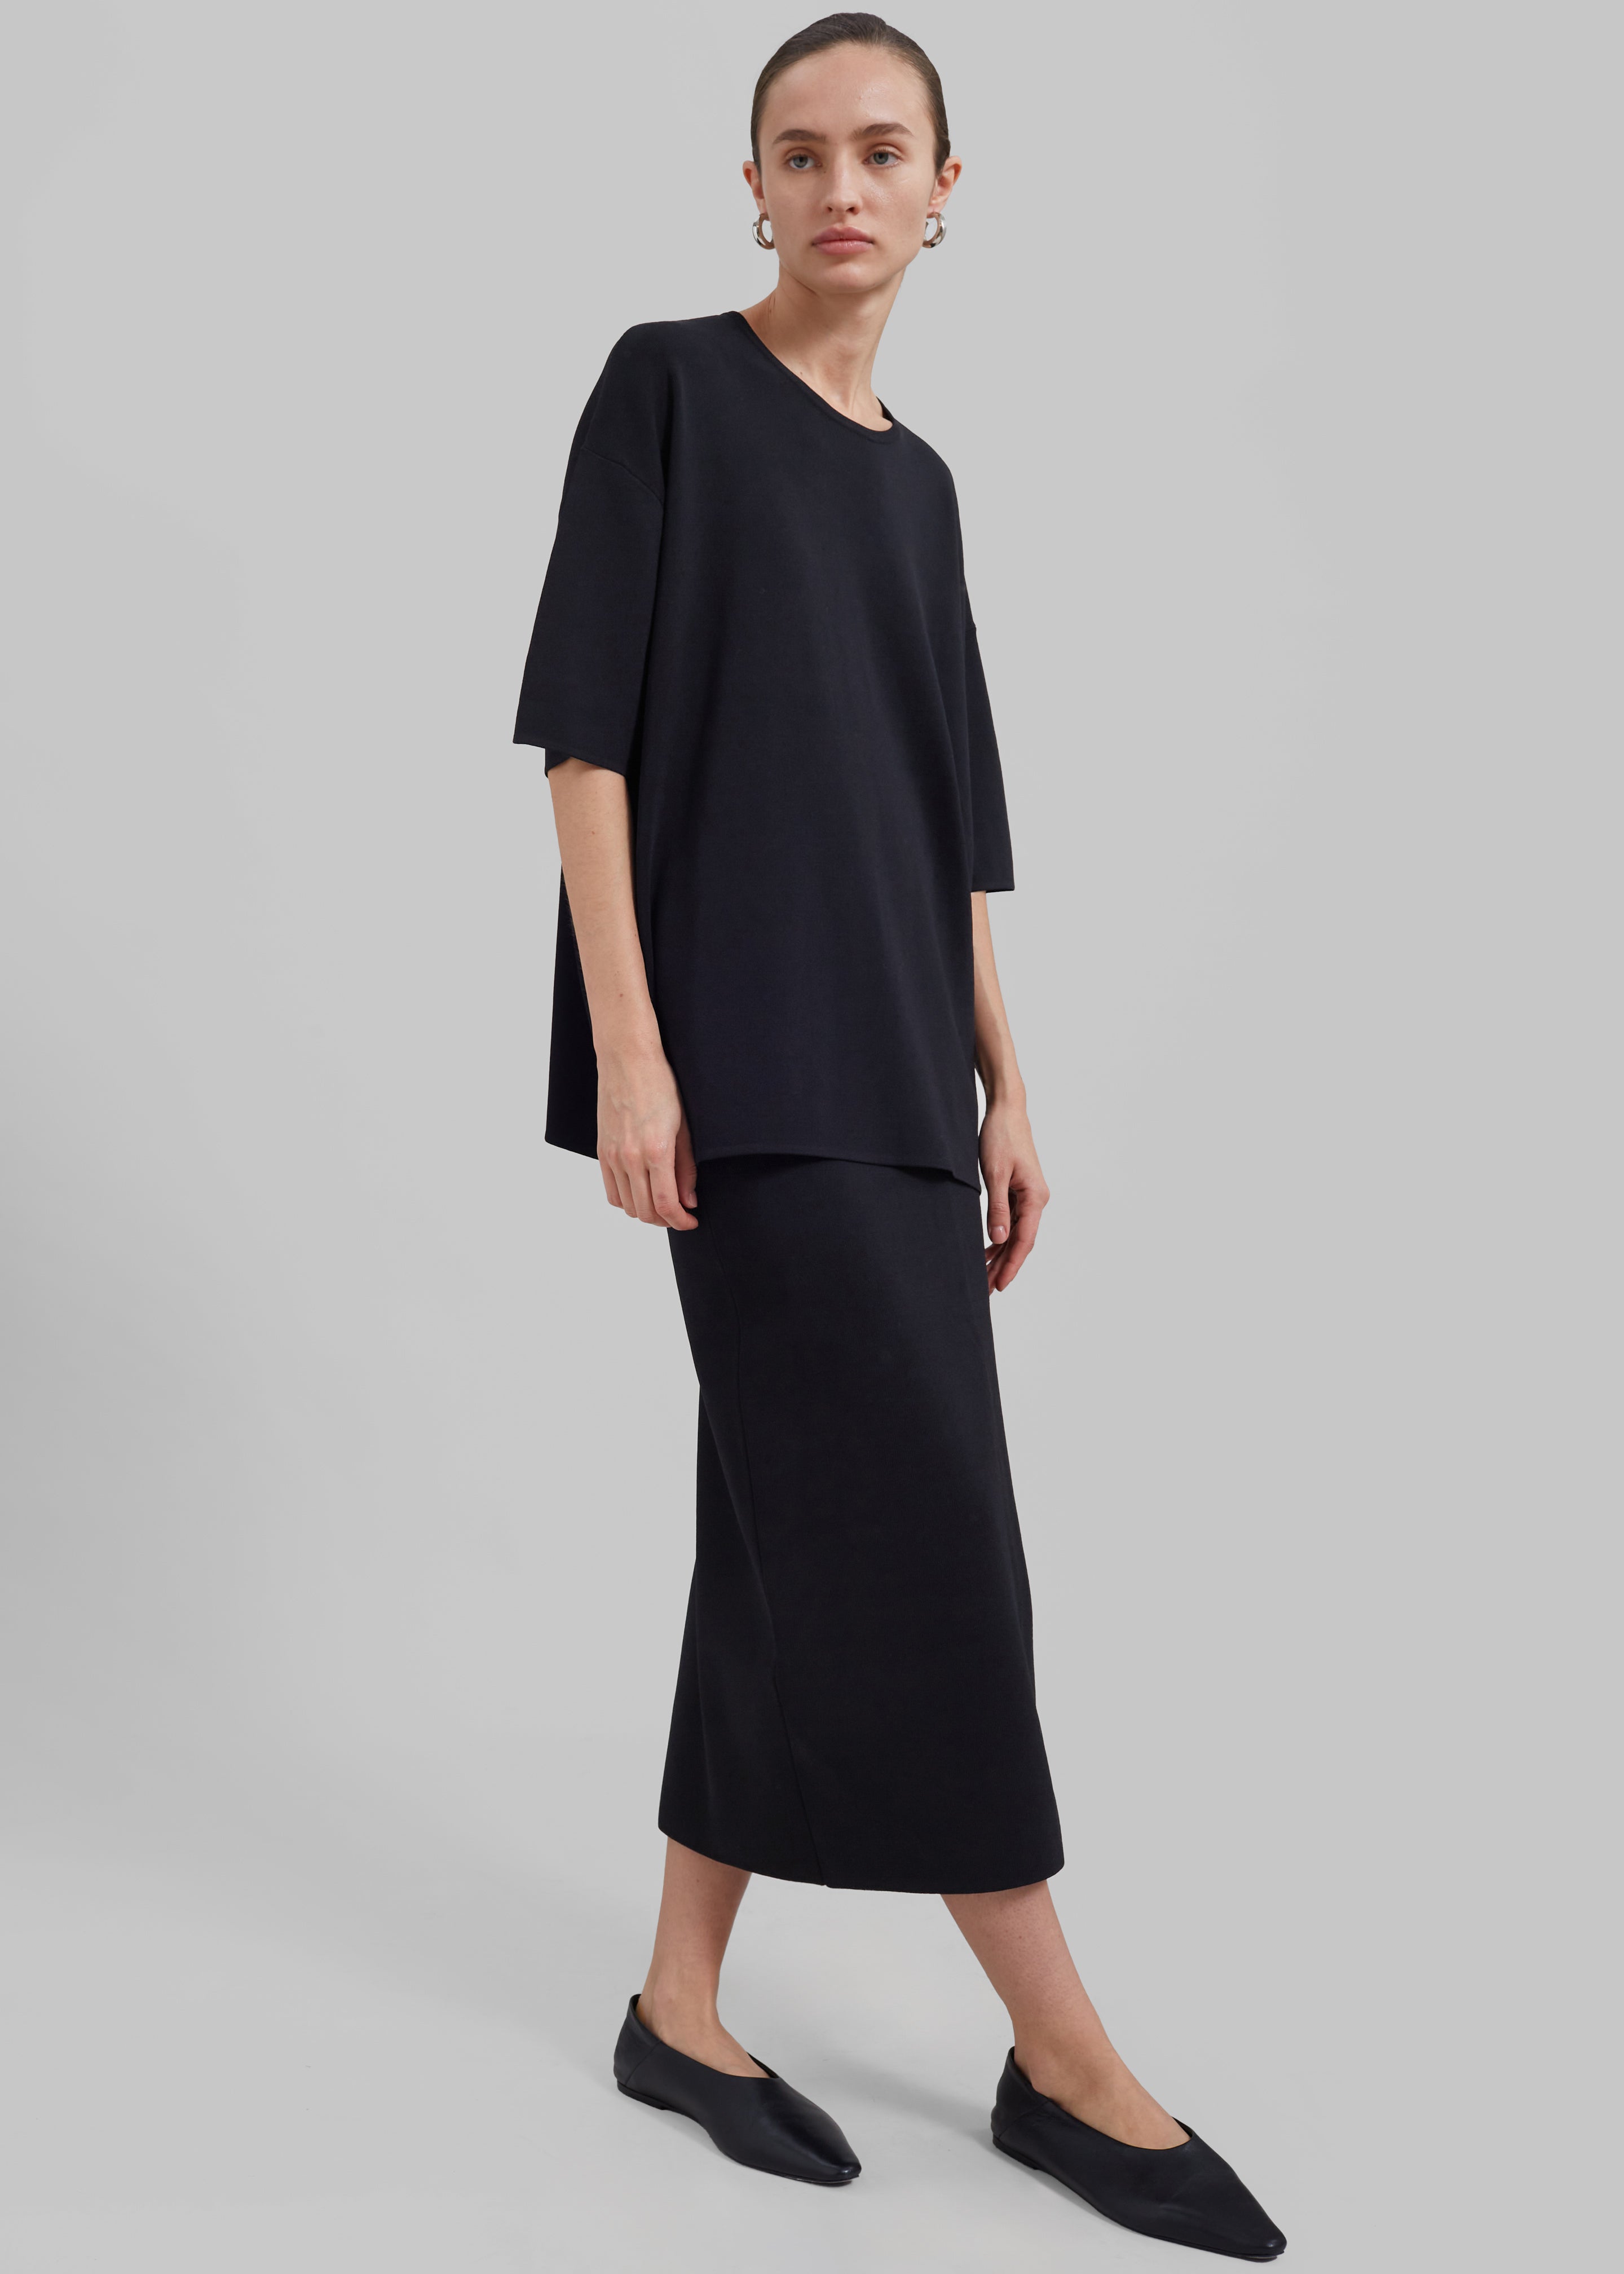 Solange Knit Pencil Skirt - Black - 1